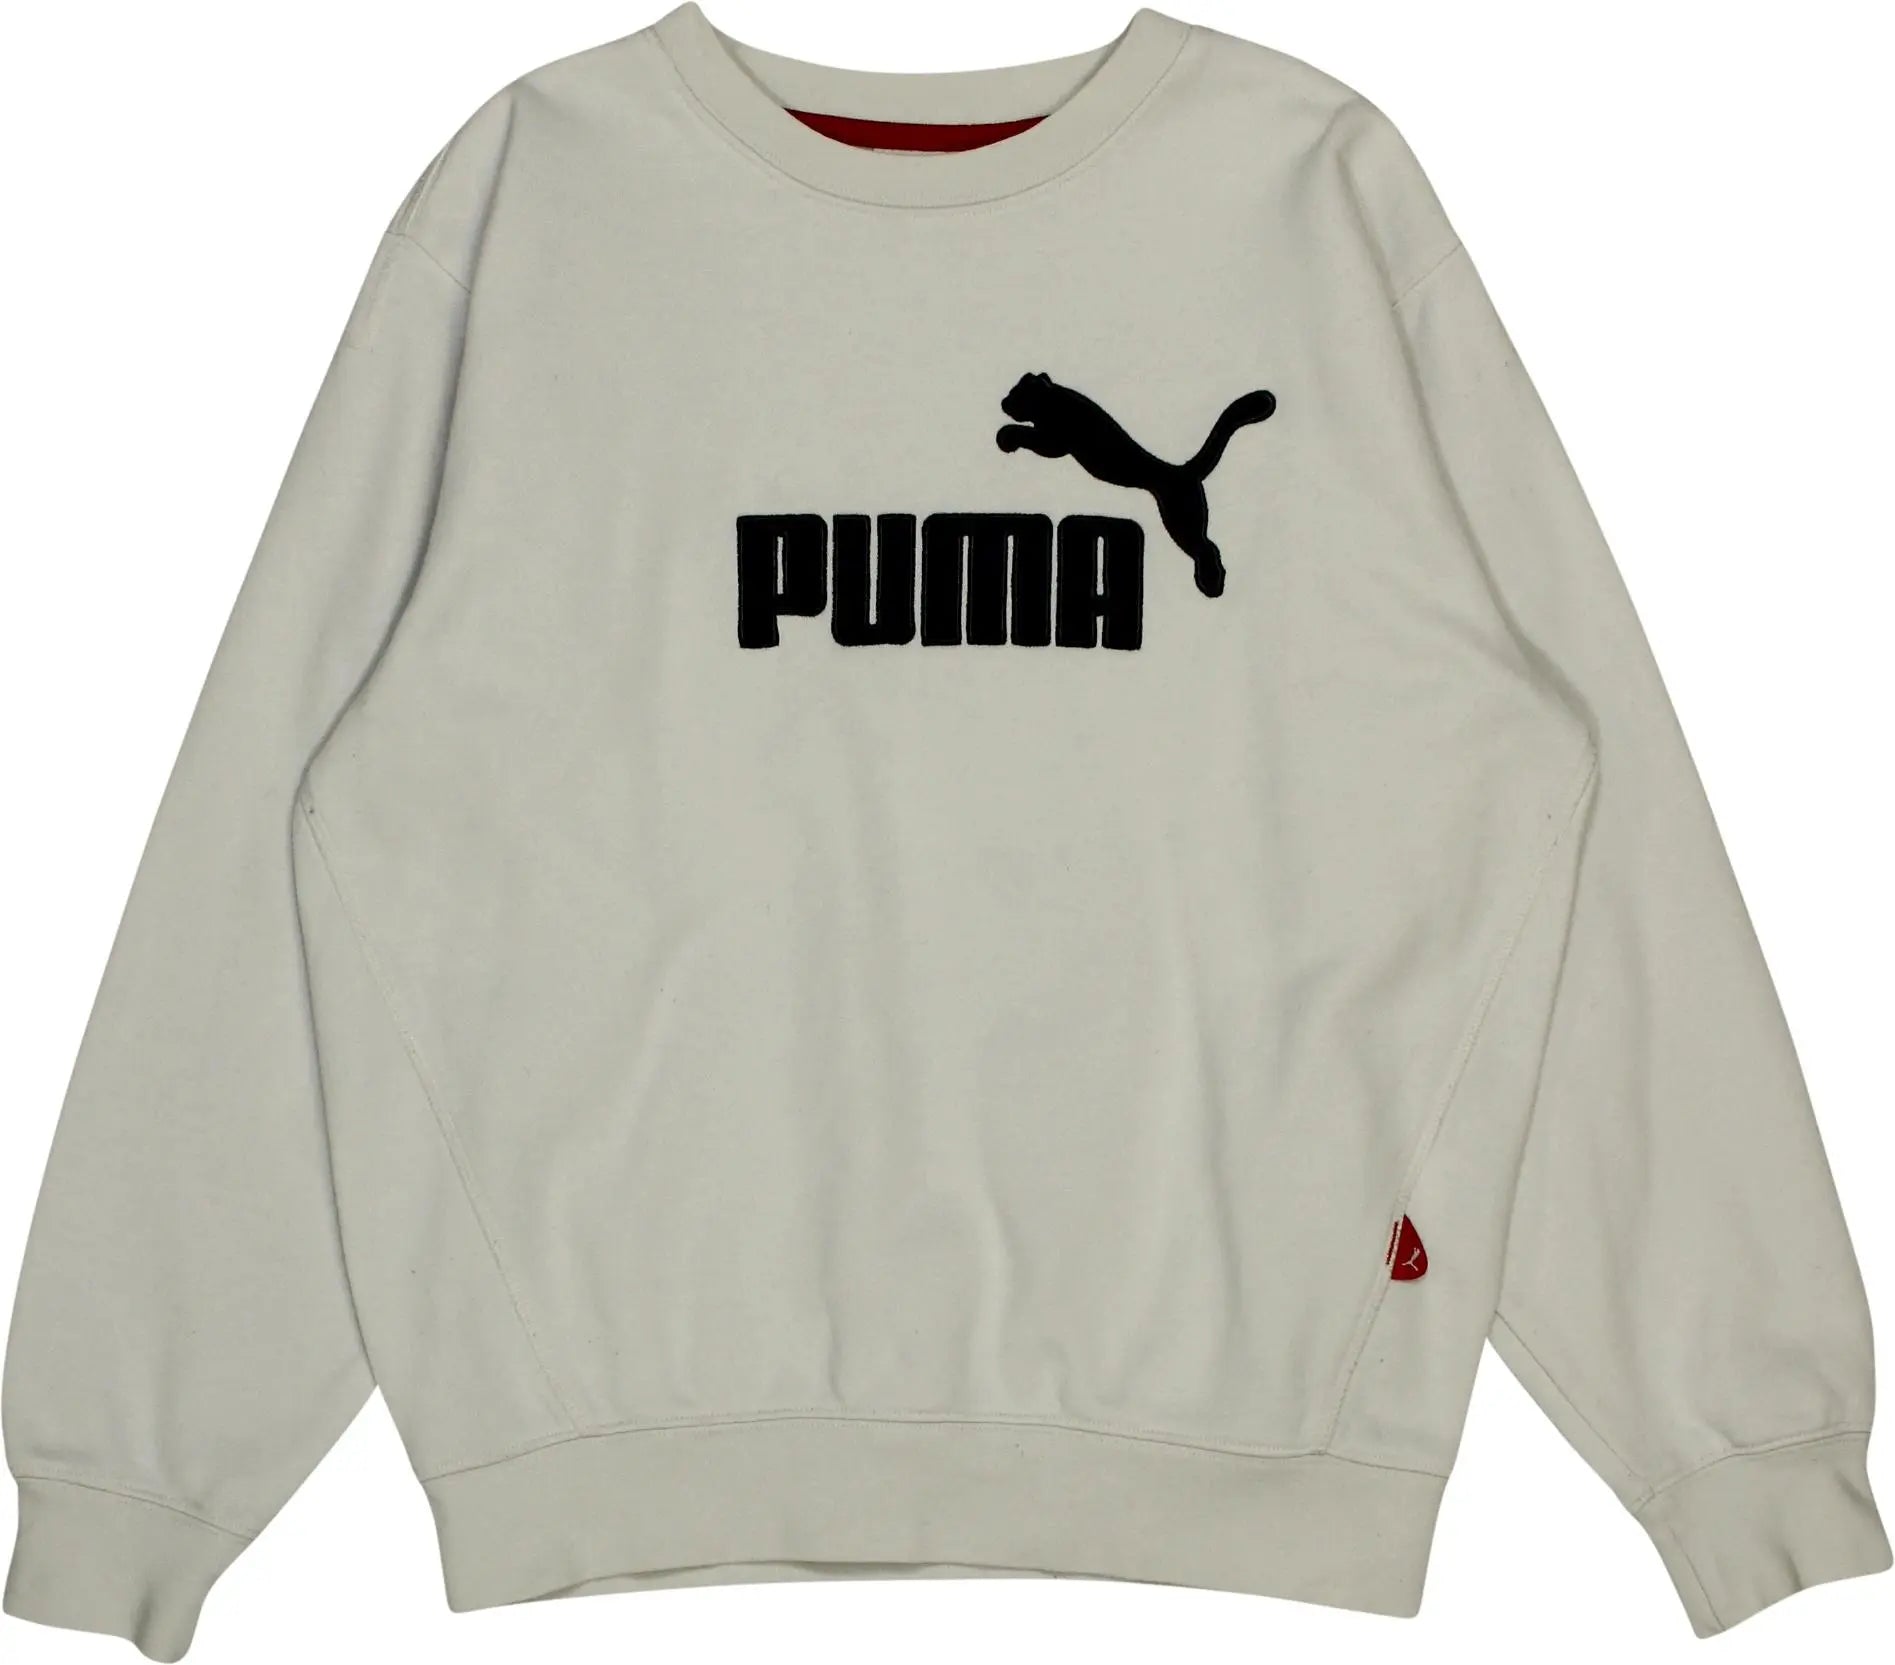 Puma - White Sweatshirt by Puma- ThriftTale.com - Vintage and second handclothing